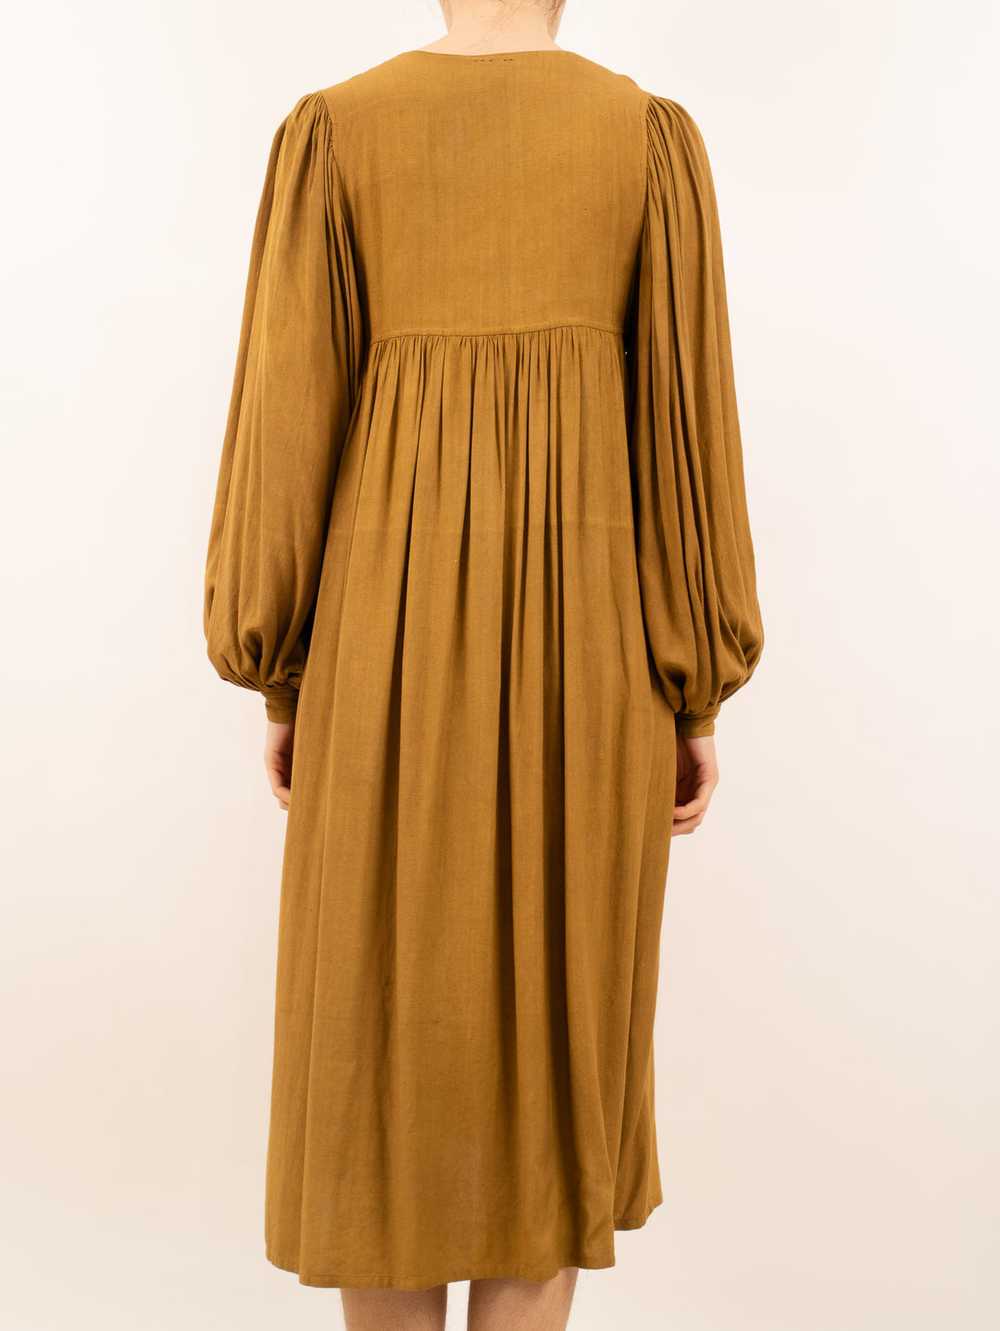 1970's golden caftan dress - image 7